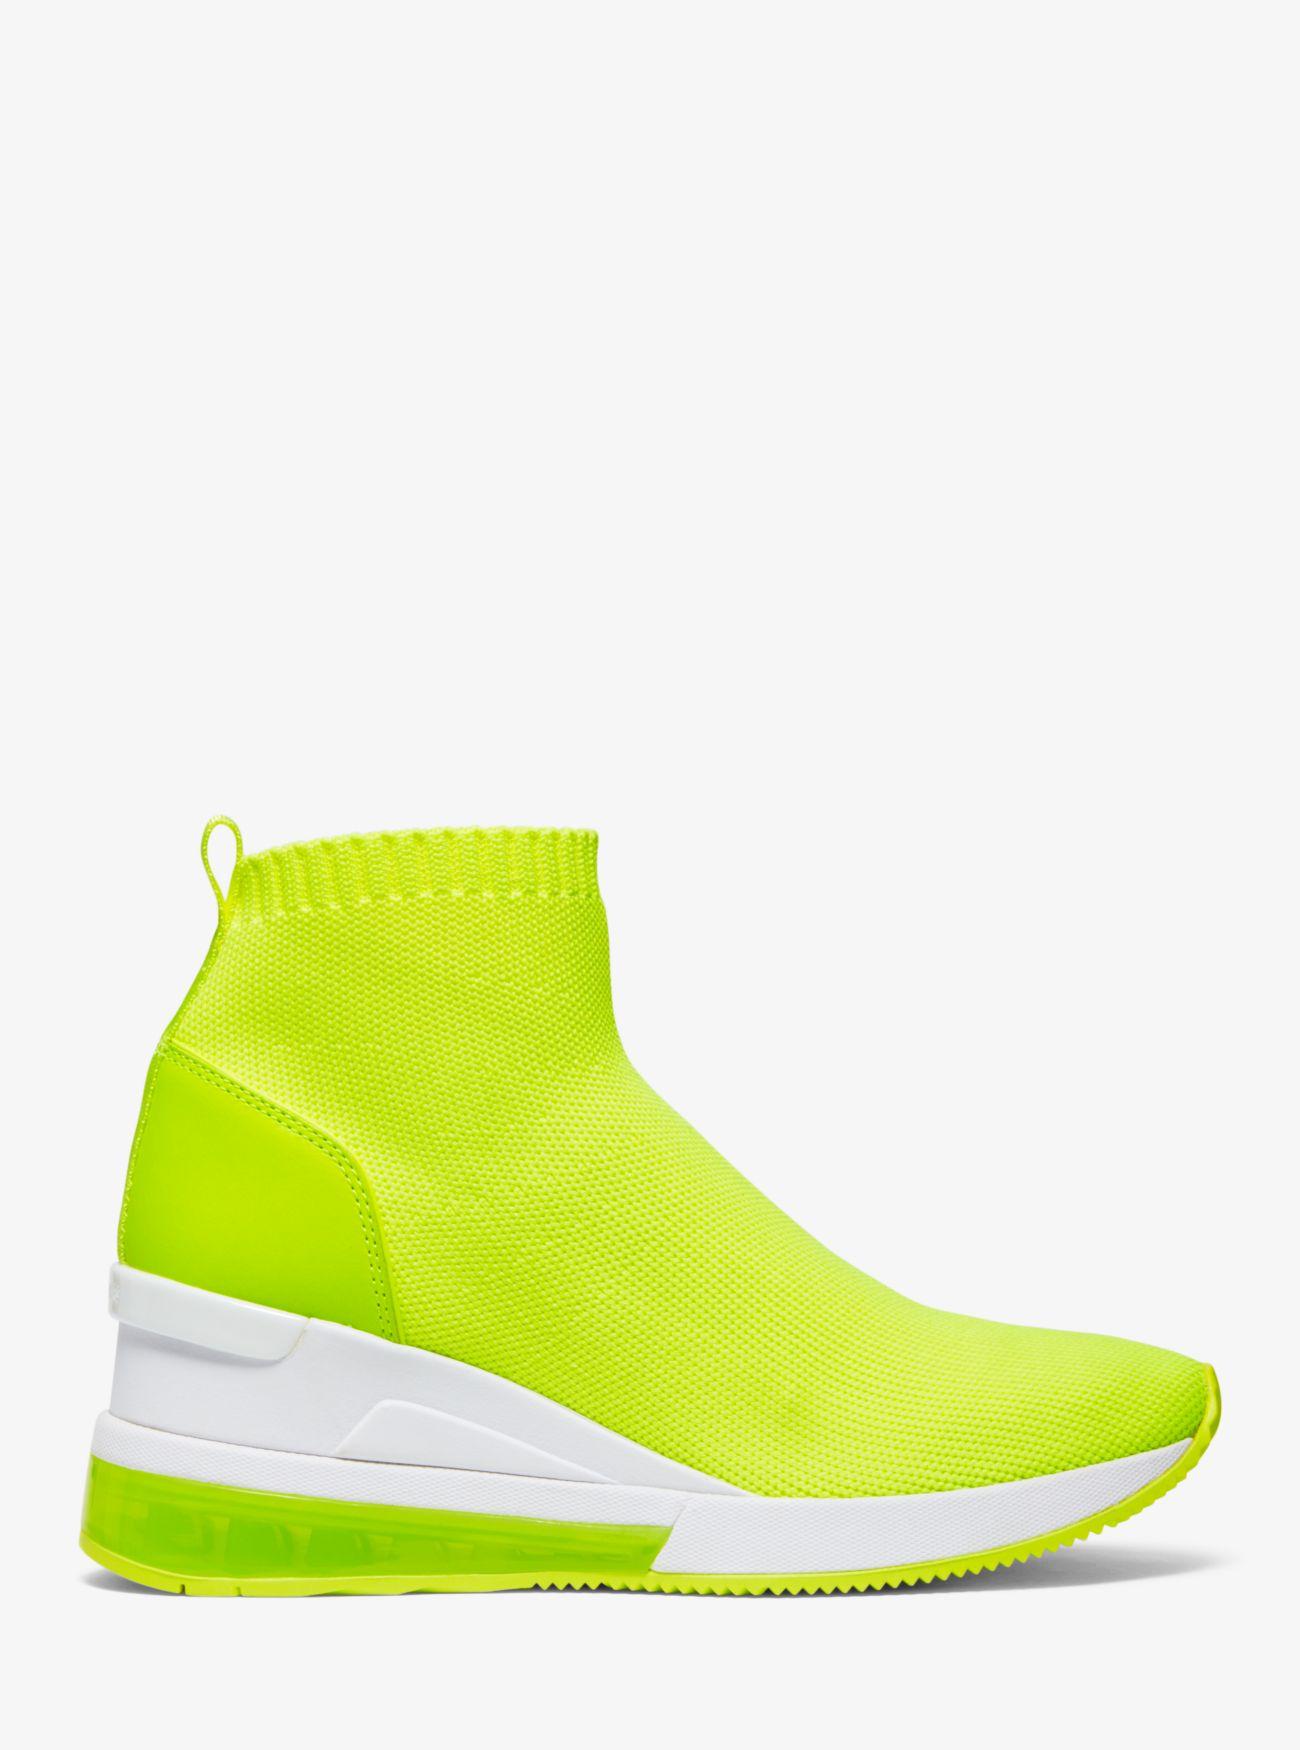 michael kors neon shoes